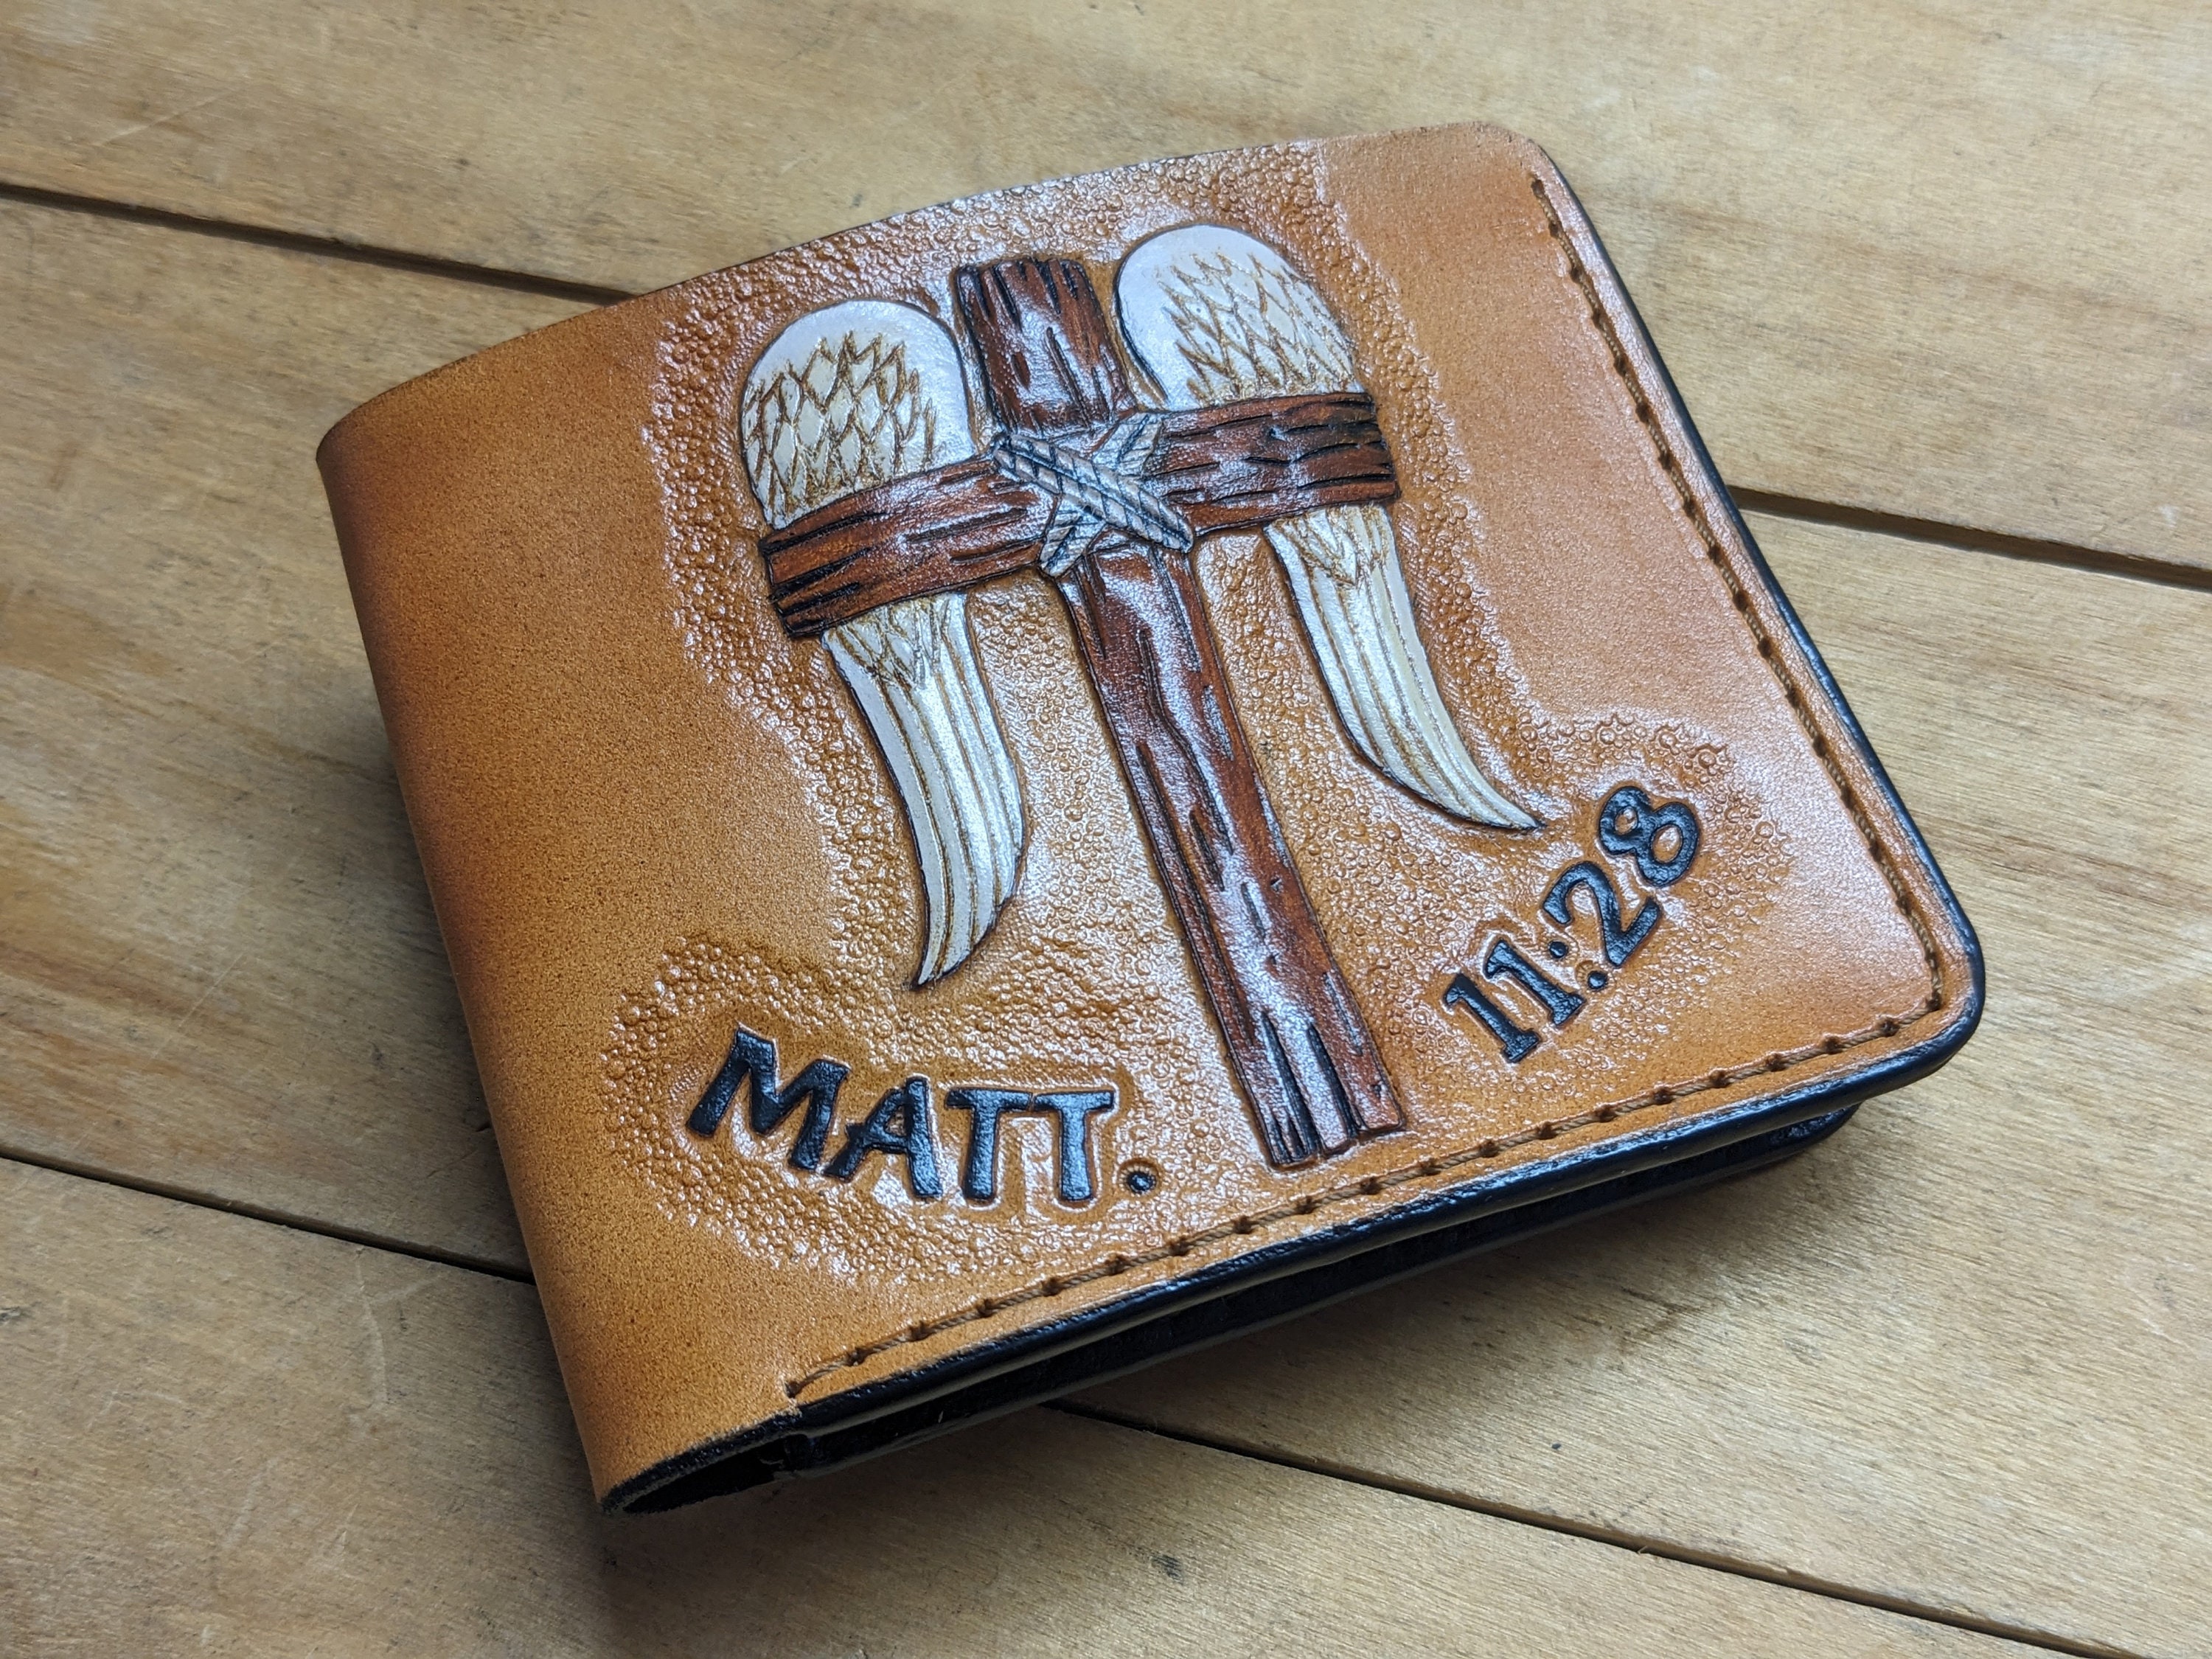 Men's 3D Genuine Leather Wallet